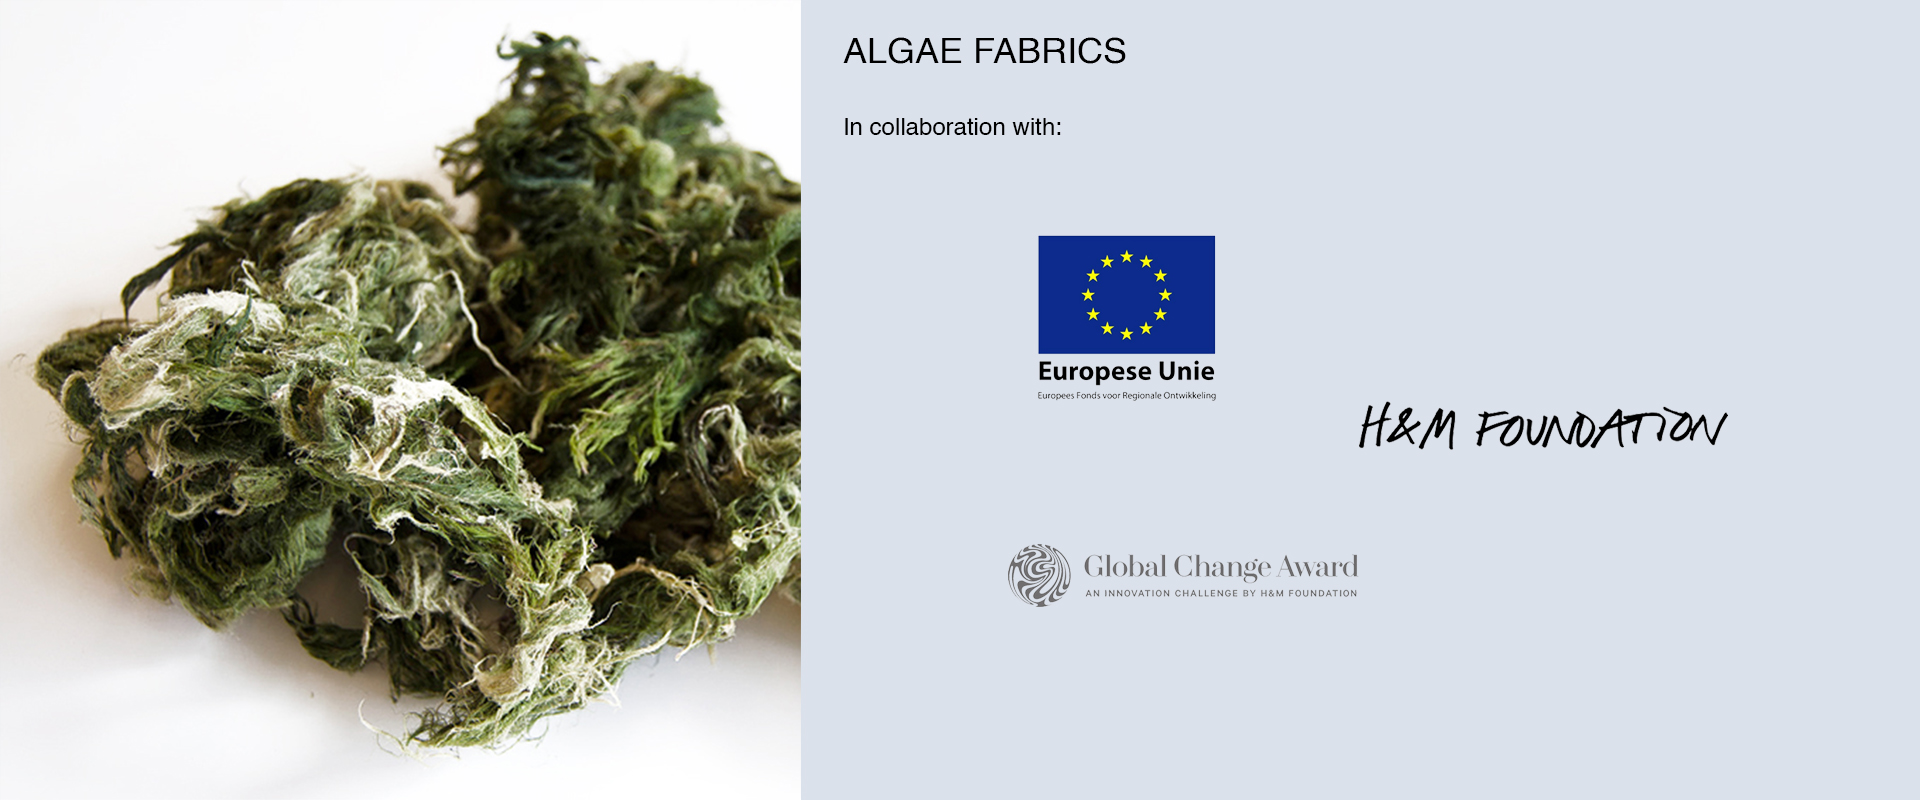 Algae fabrics